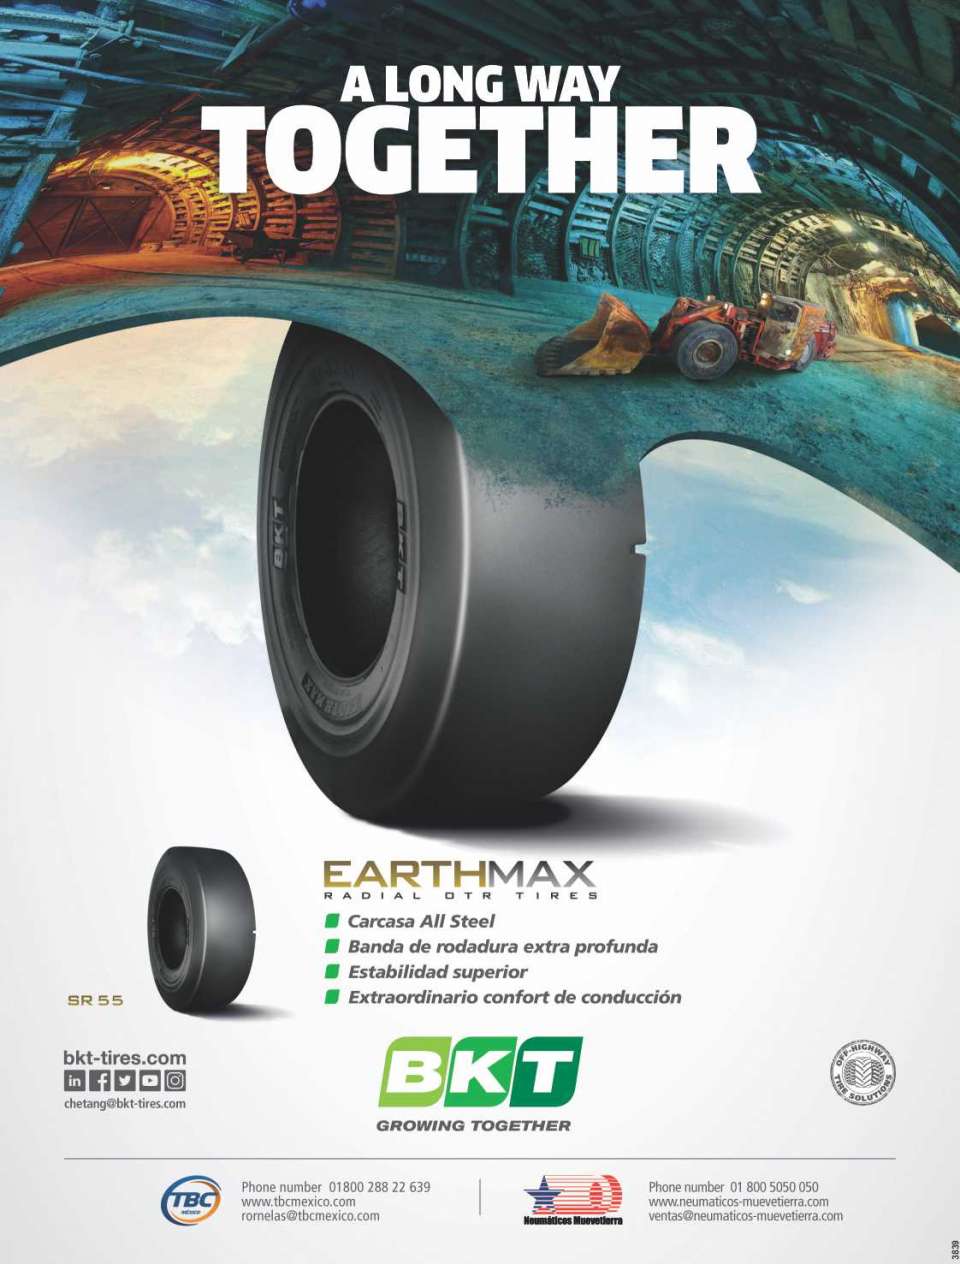 BKT - EARTHMAX - Radial OTR Tires. Neumaticos para maquinaria minera.